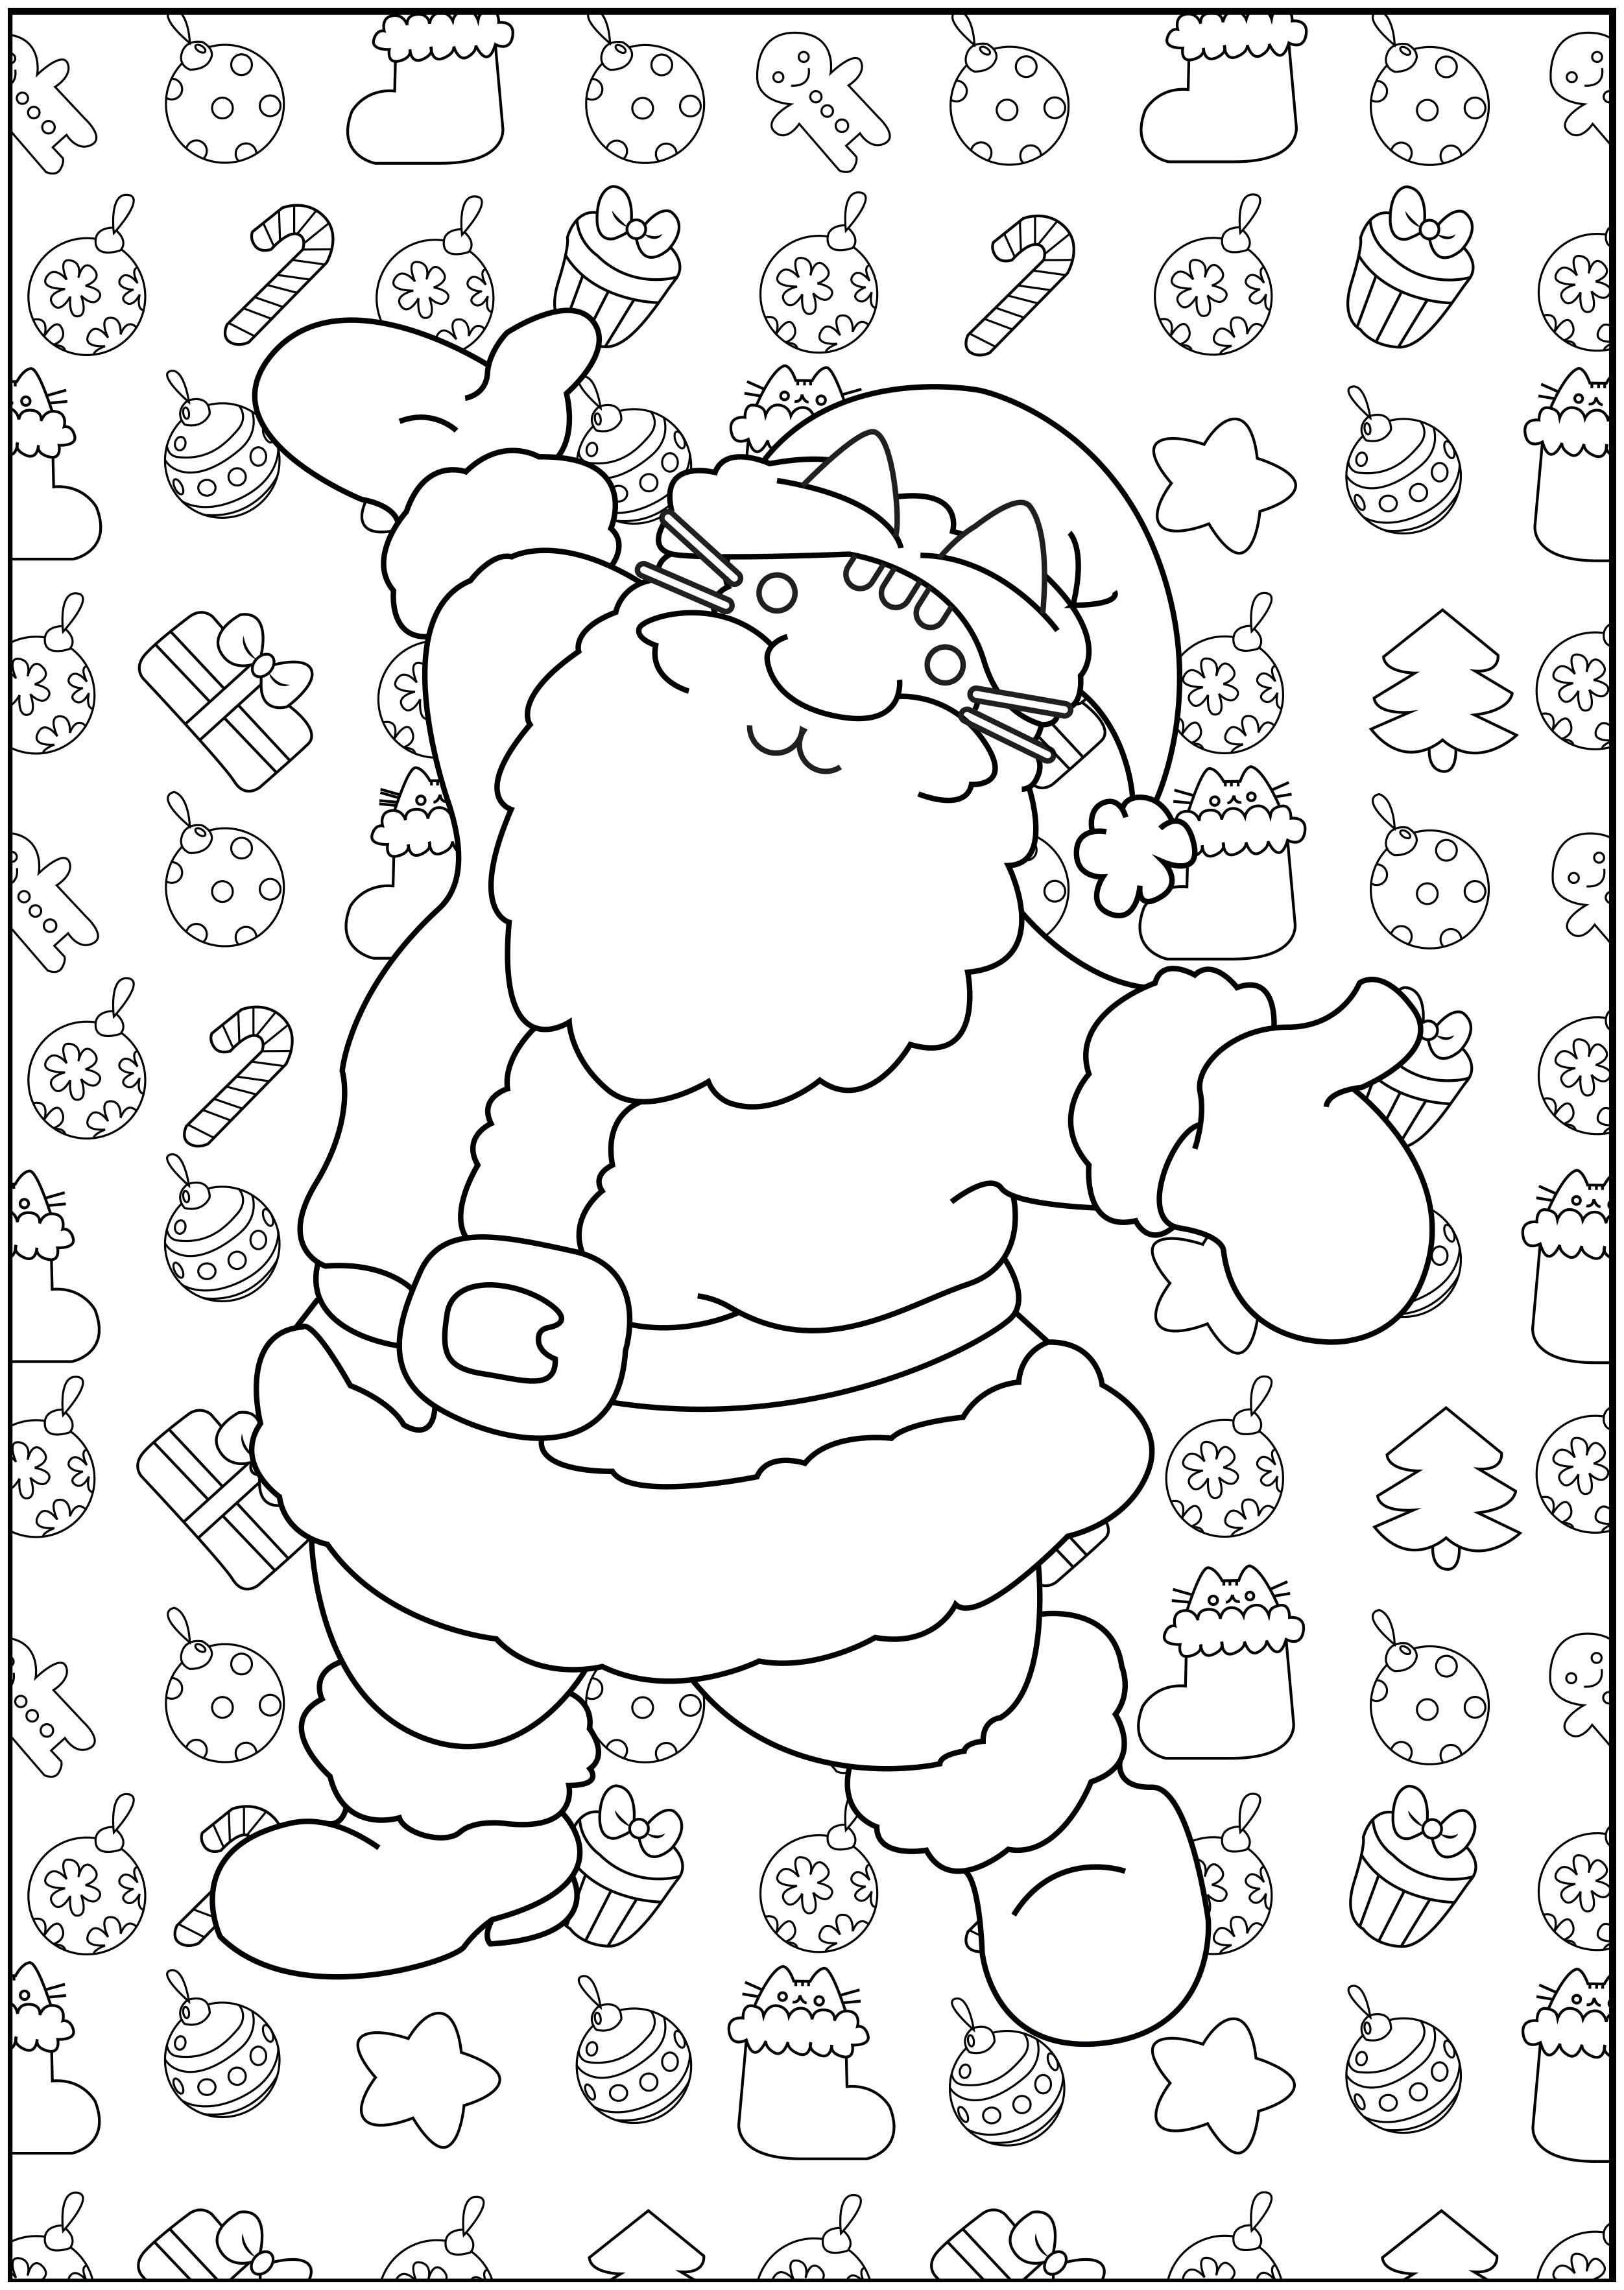 Santa-claus-to-color-for-children - Santa Claus Kids Coloring Pages